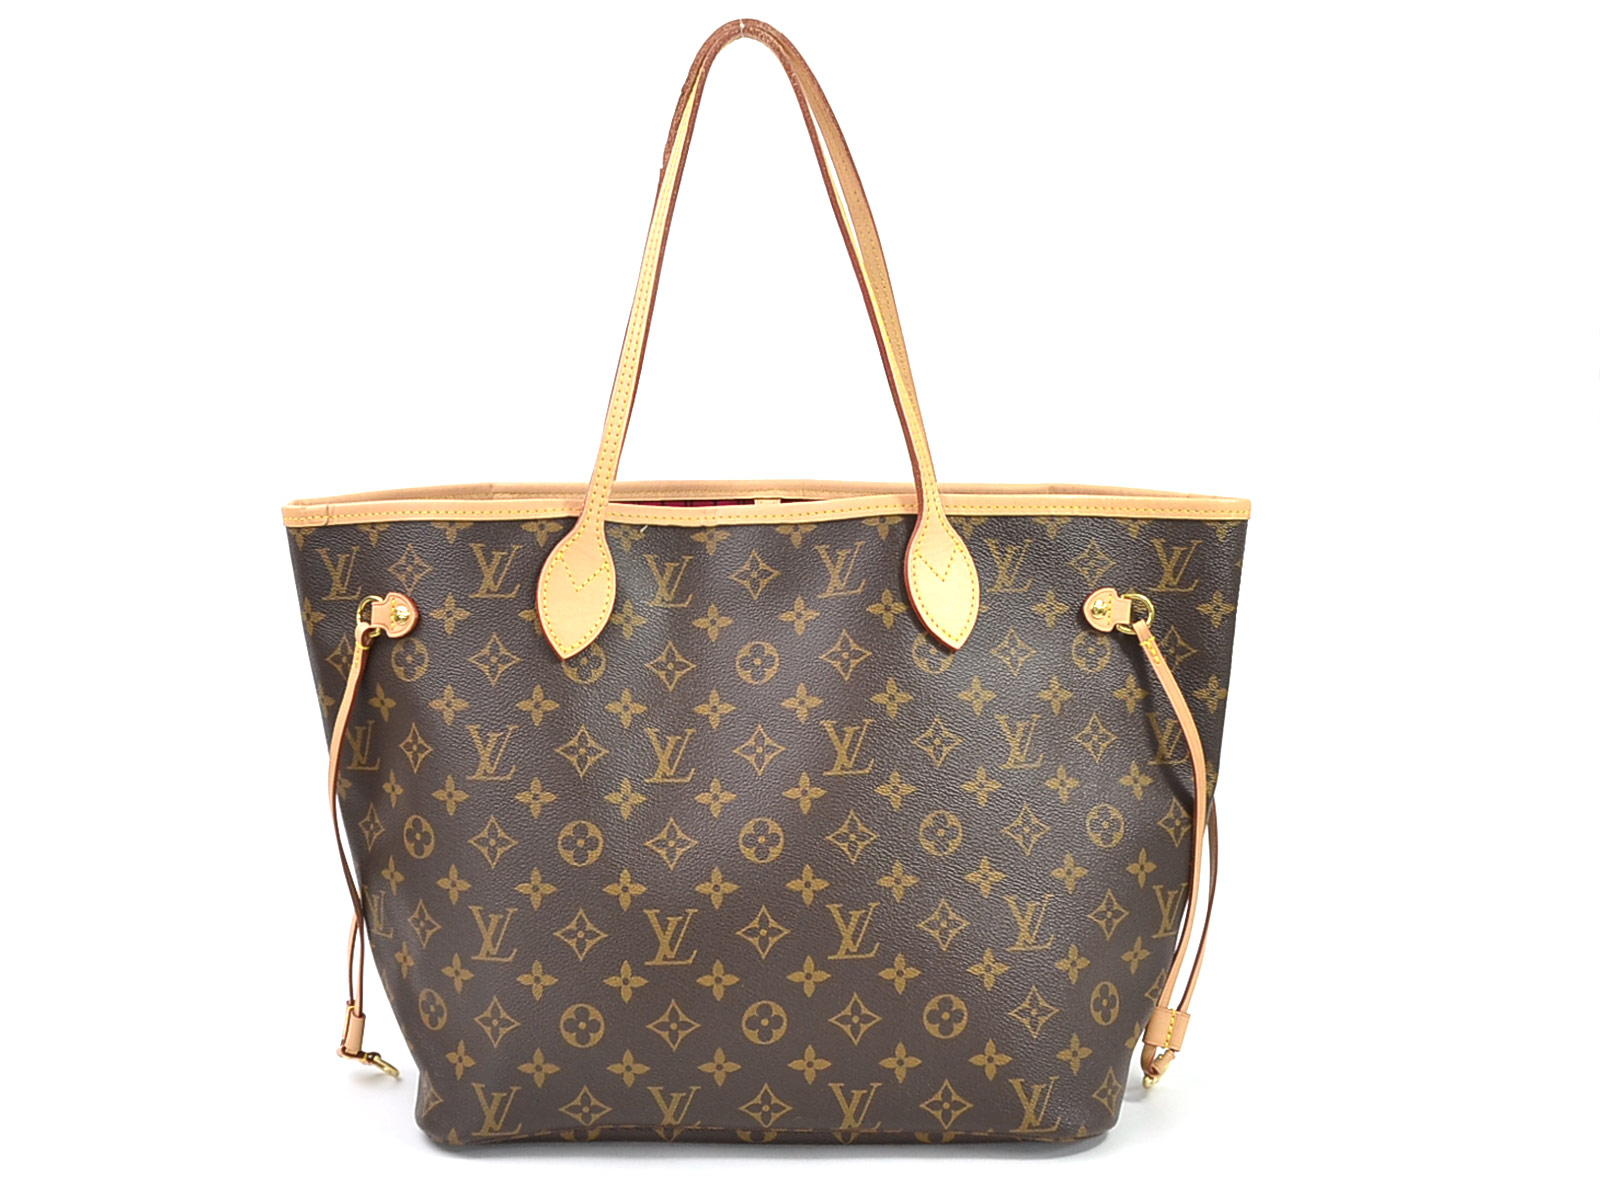 Auth Louis Vuitton Monogram Neverfull MM Tote Bag Shoulder Bag M40996 - 97908a | eBay